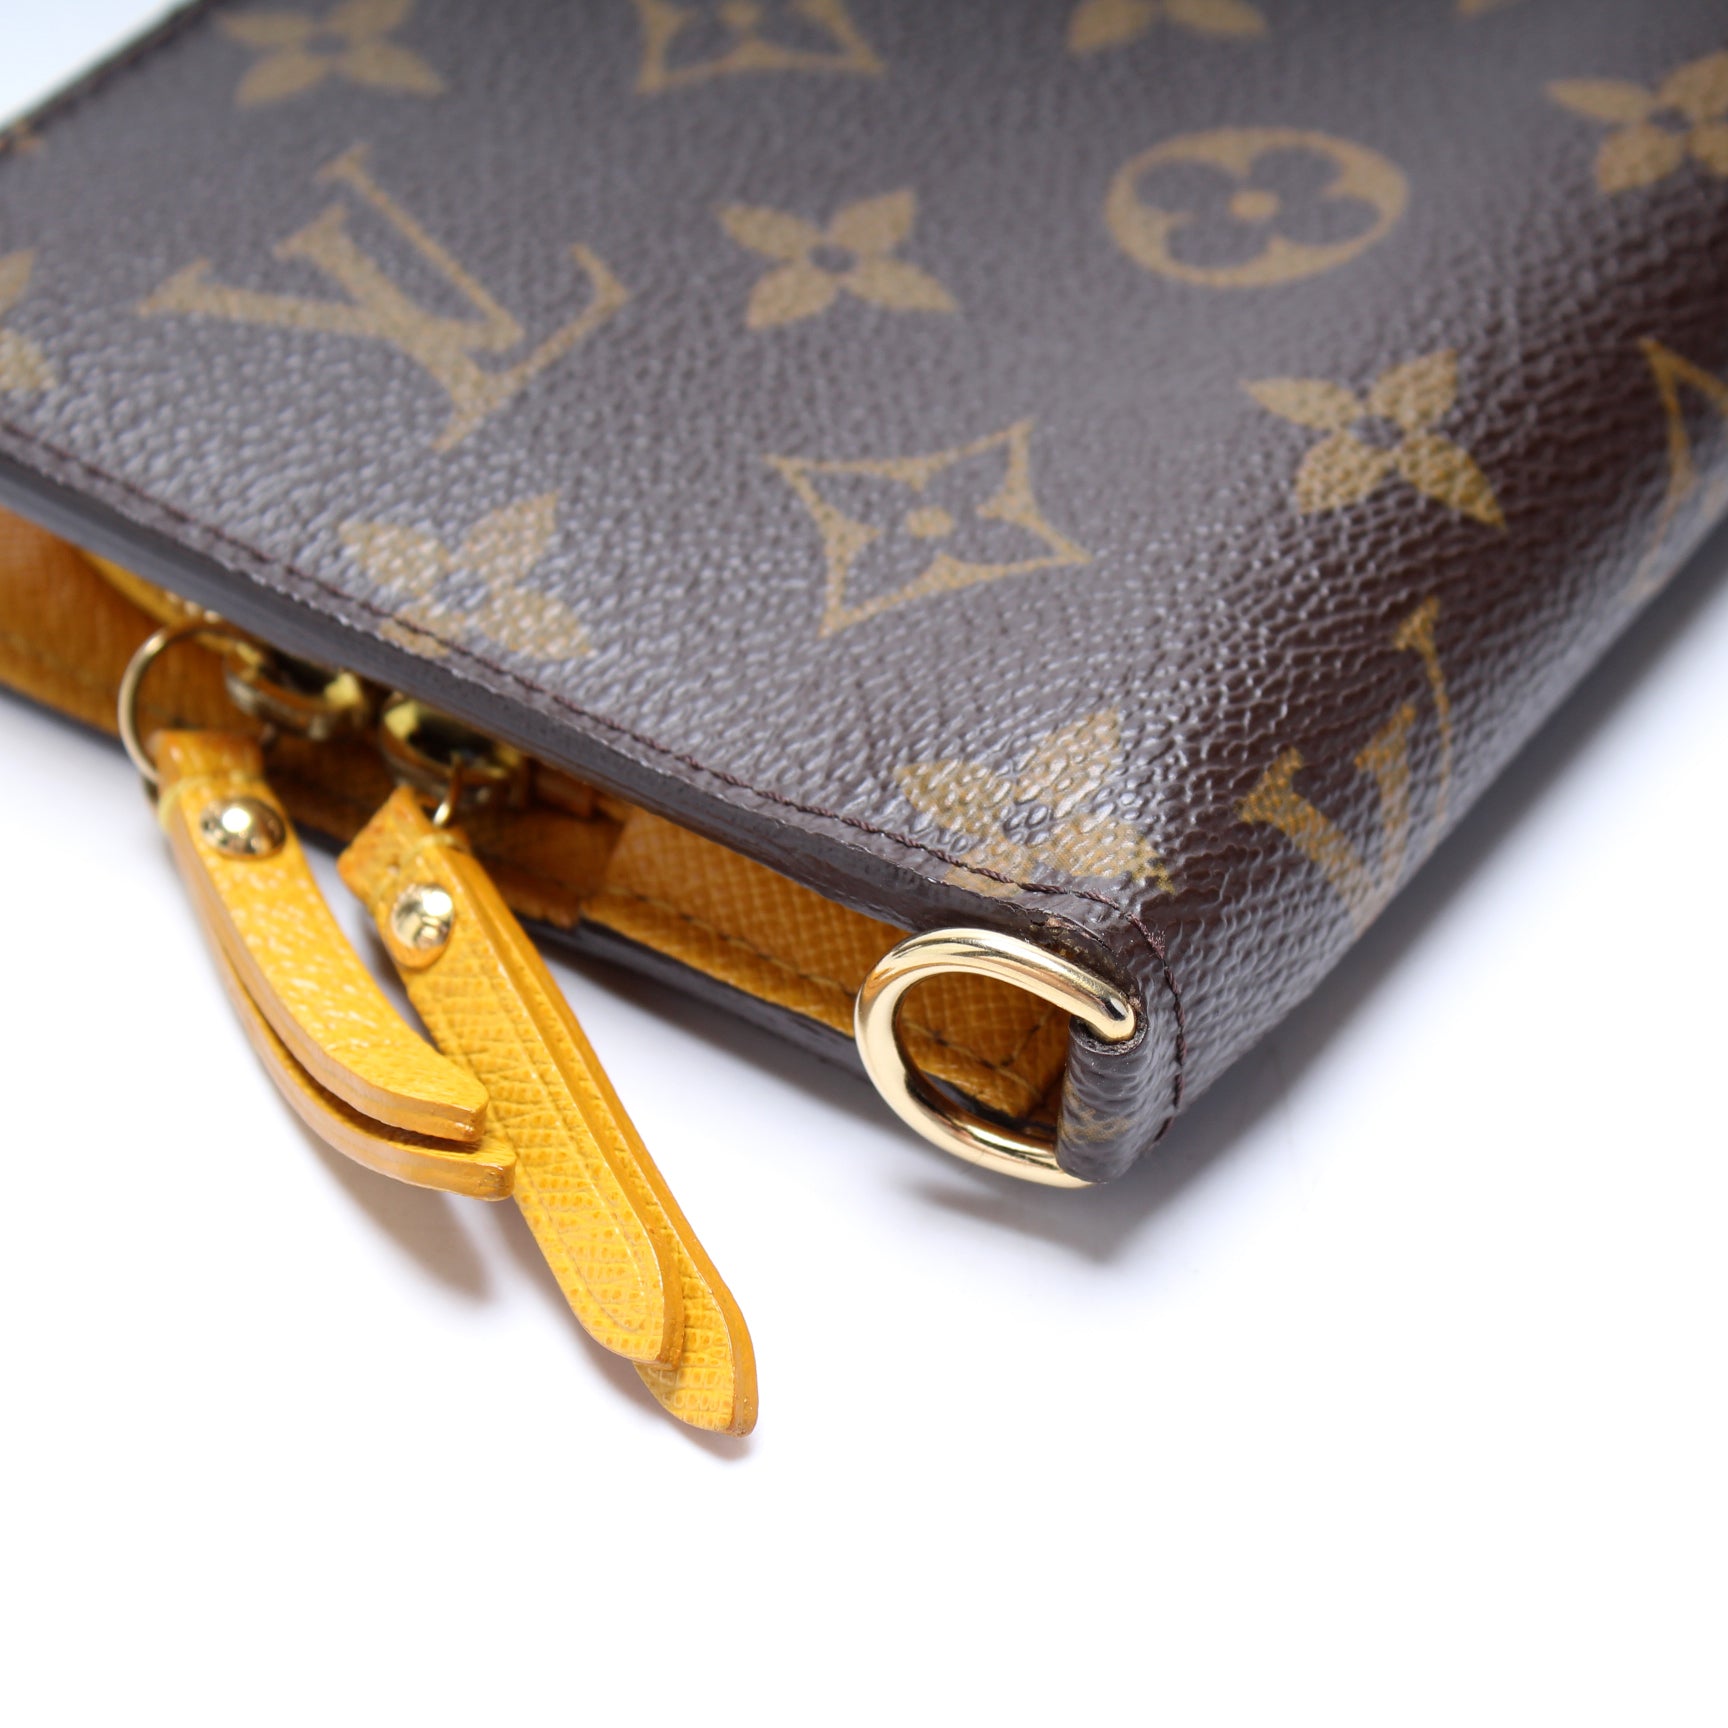 Louis Vuitton - Authenticated Insolite Wallet - Multicolour for Women, Good Condition